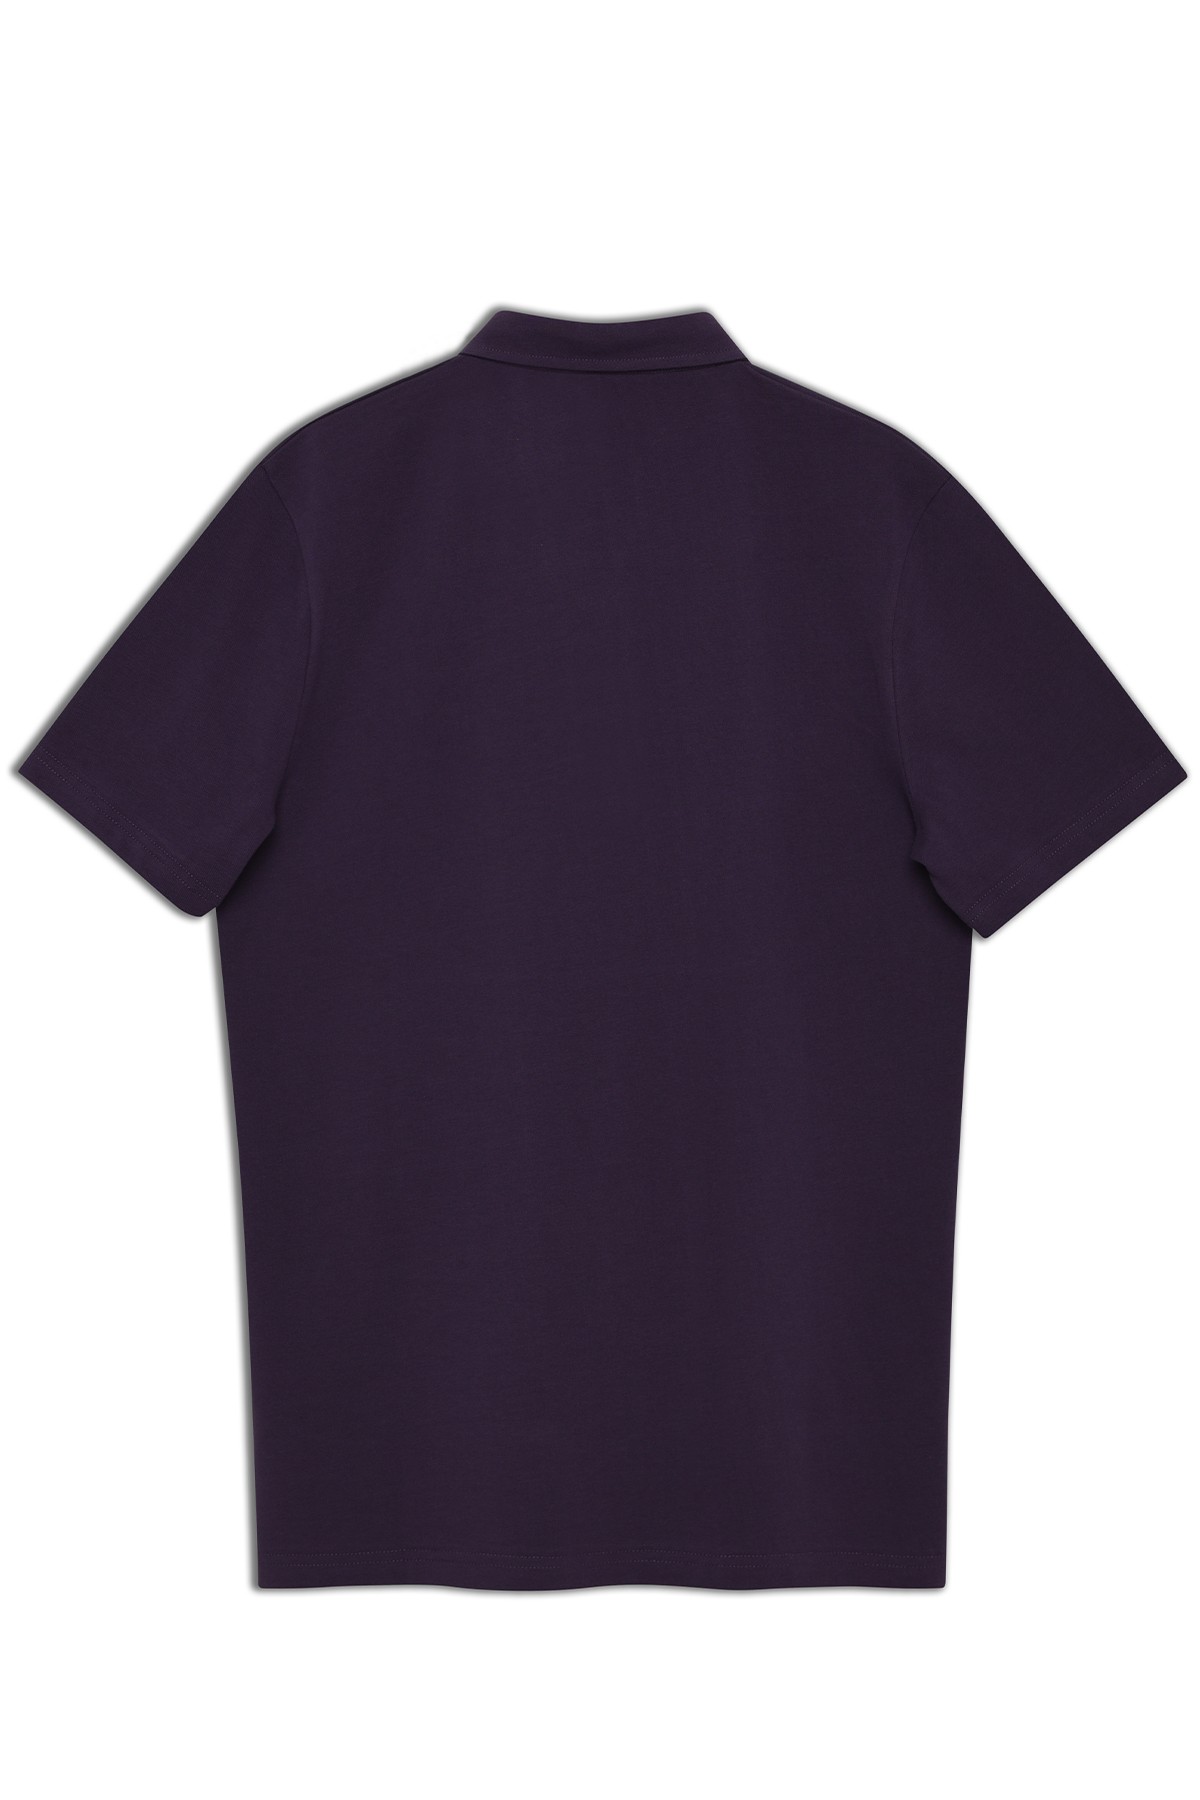 Vav Tasarım Punto Baskılı Pamuk Polo Yaka Mor T-shirt 23'